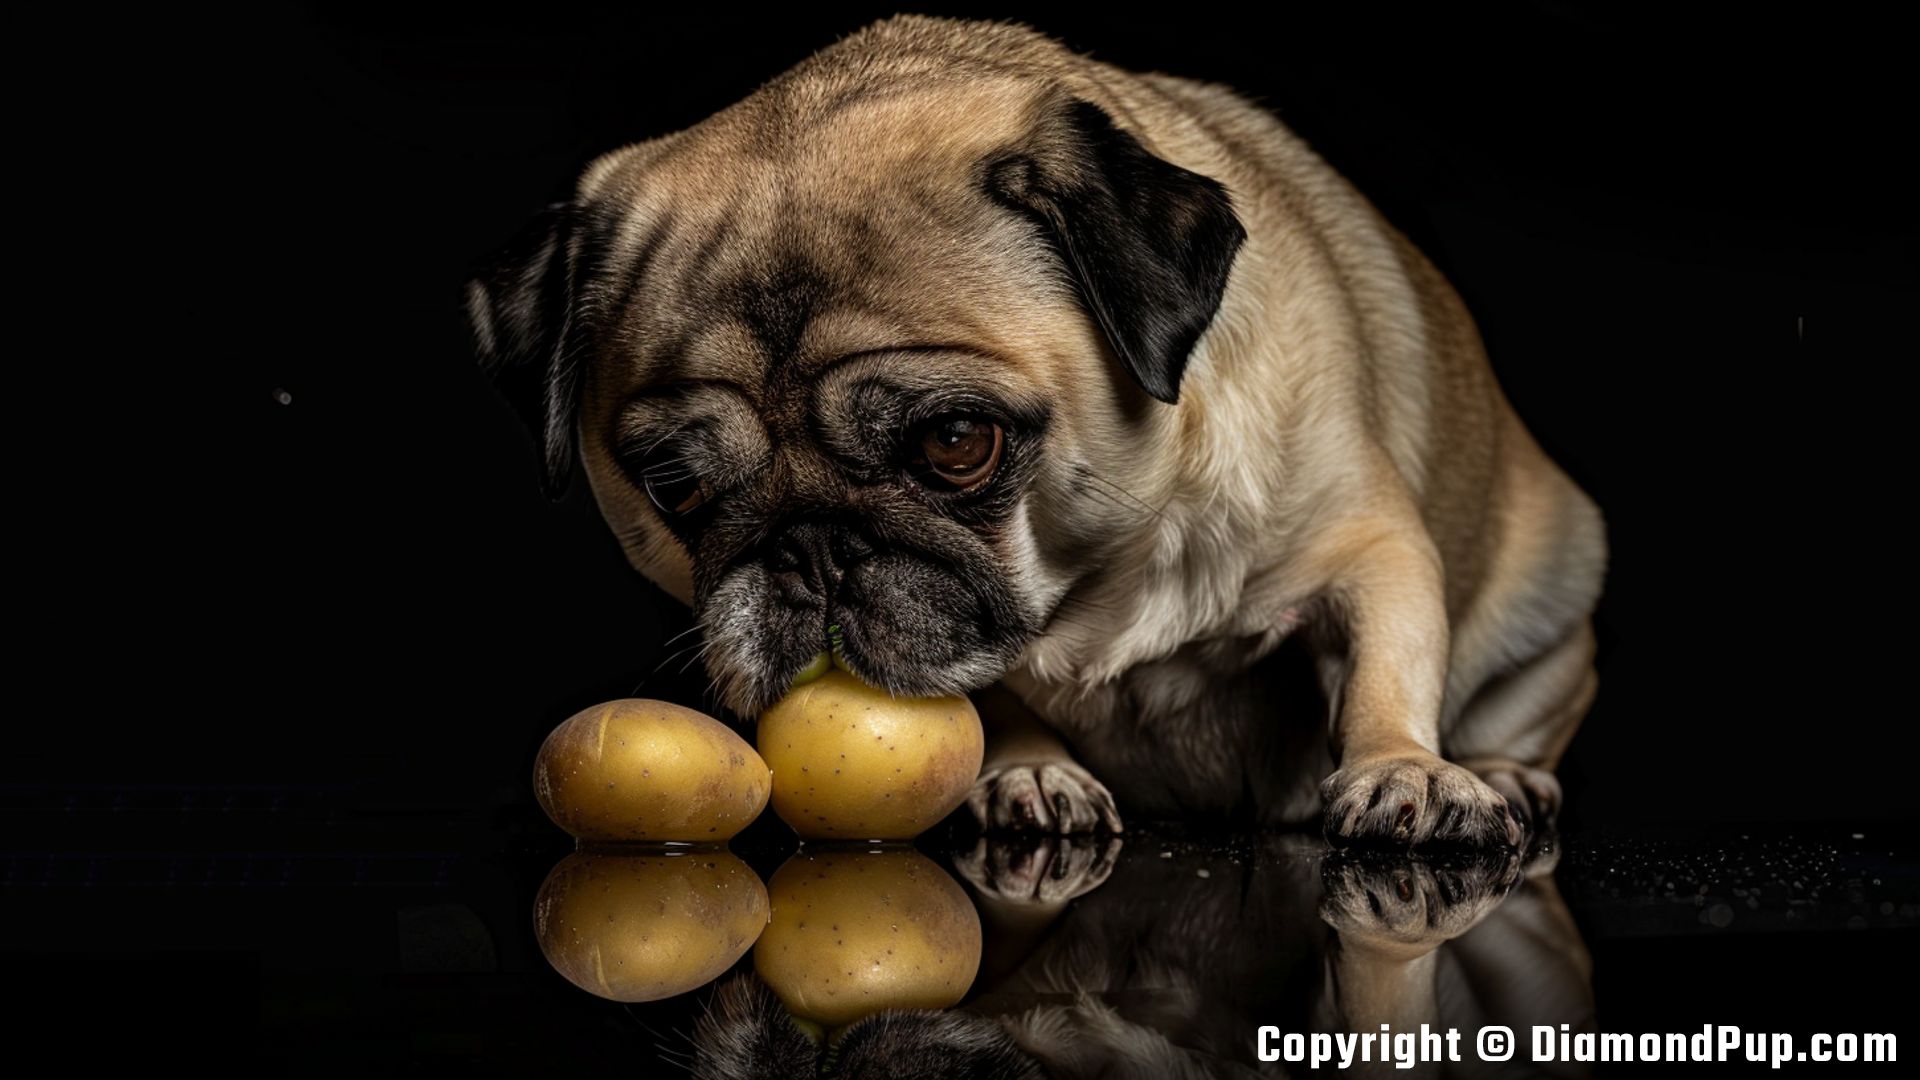 Photograph of a Happy Pug Eating Potato